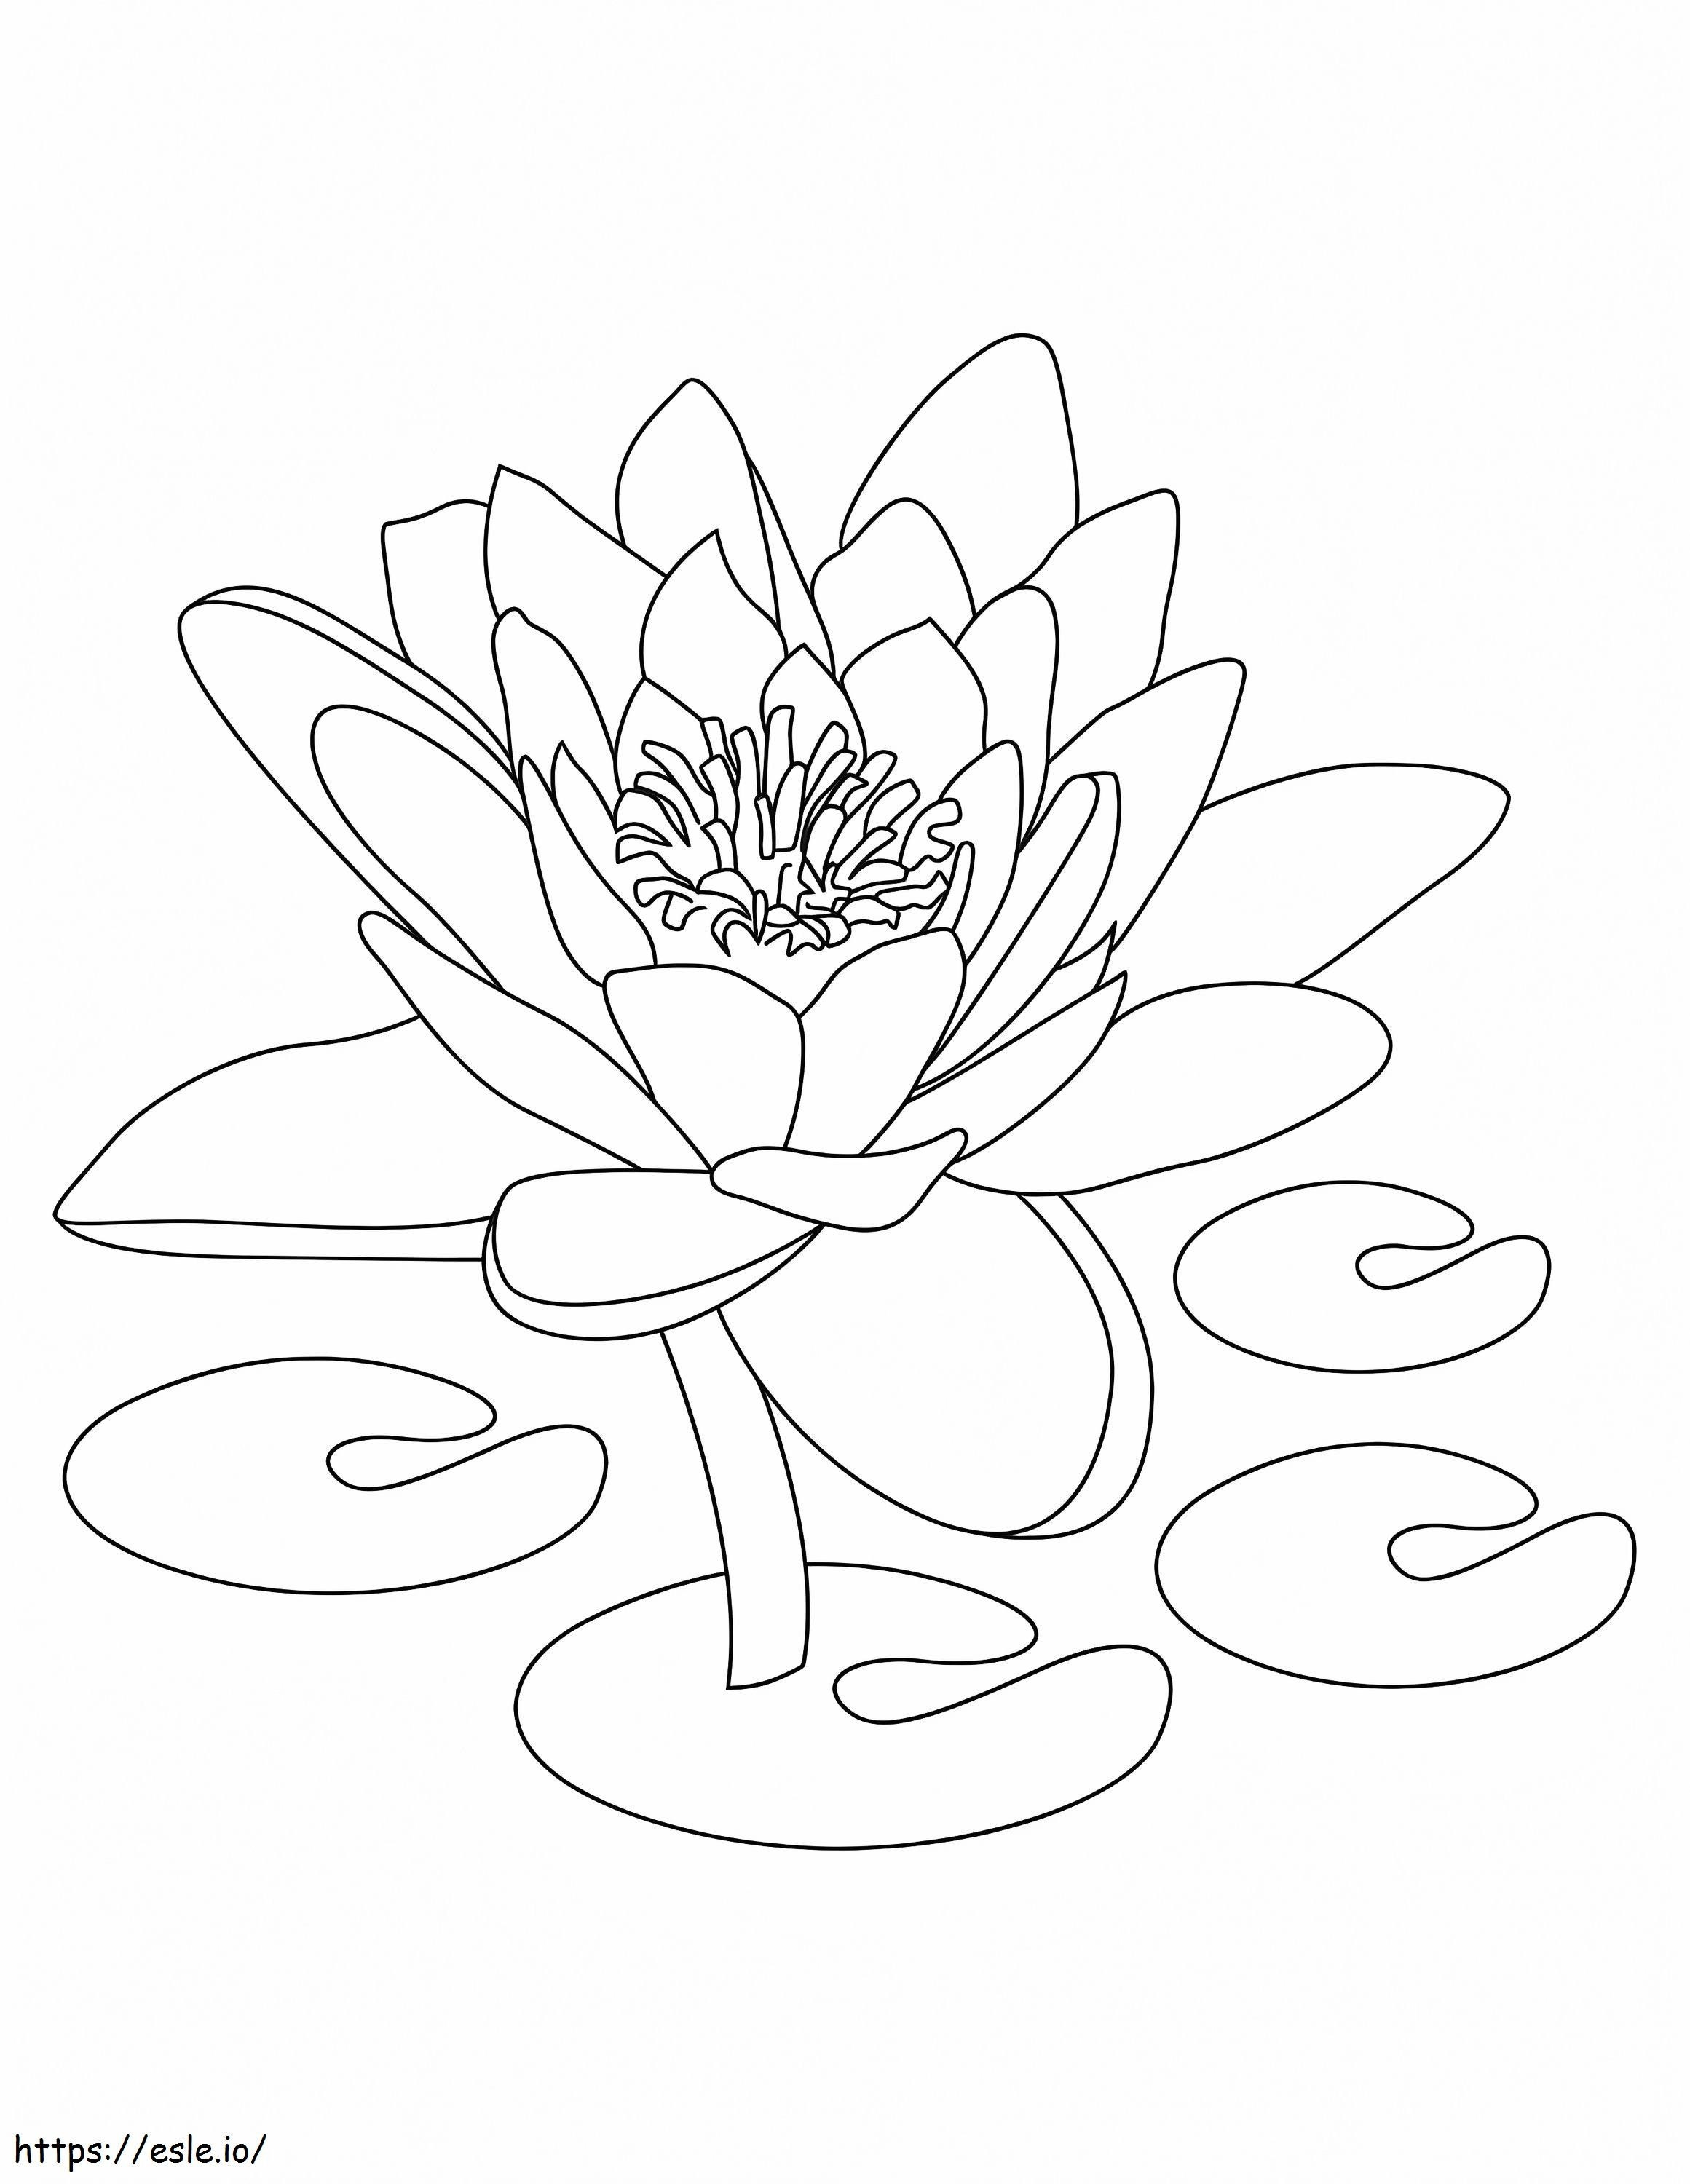 Printable Lotus coloring page